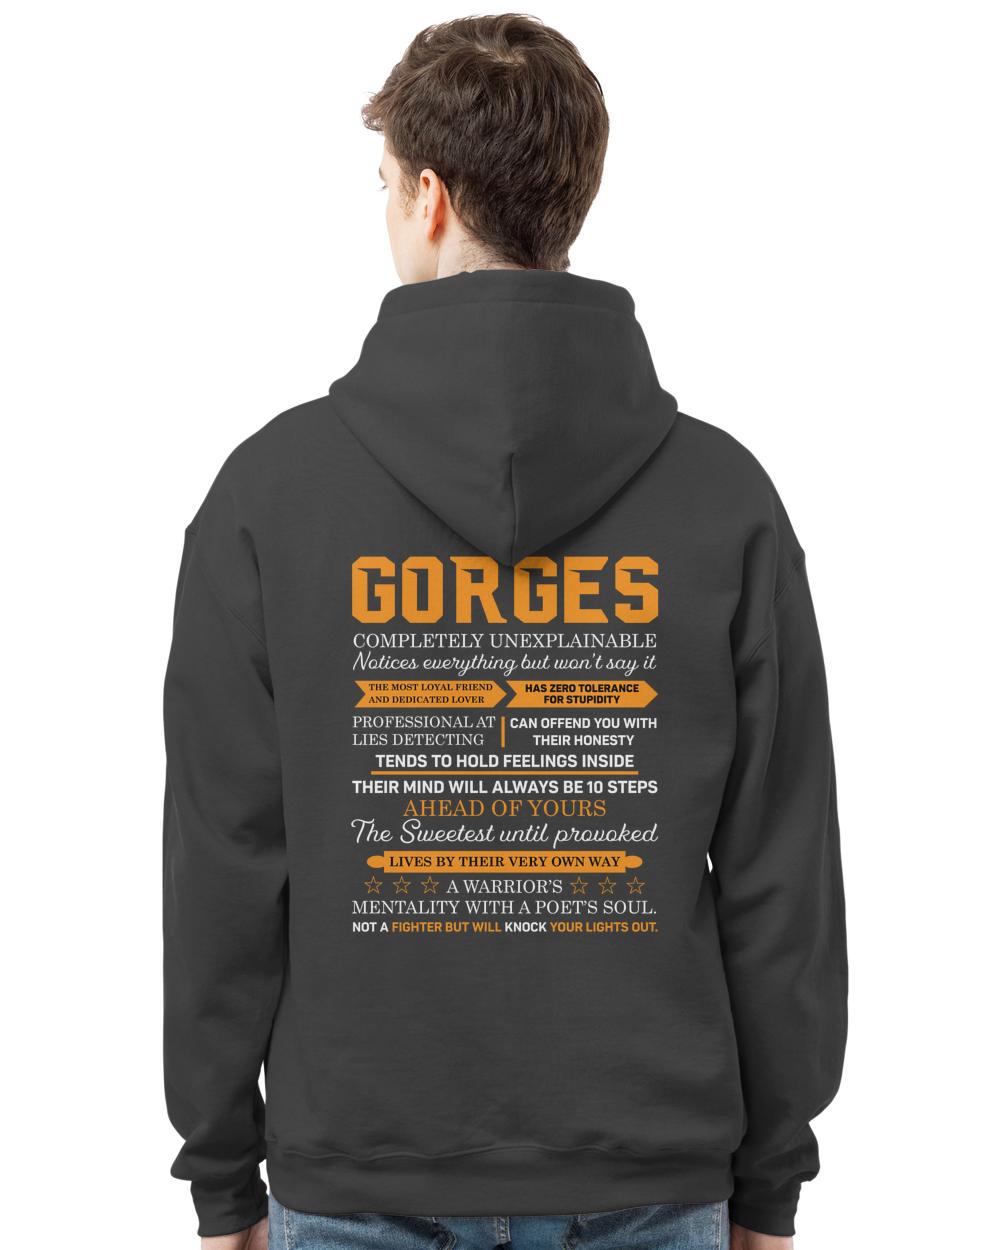 GORGES-13K-N1-01